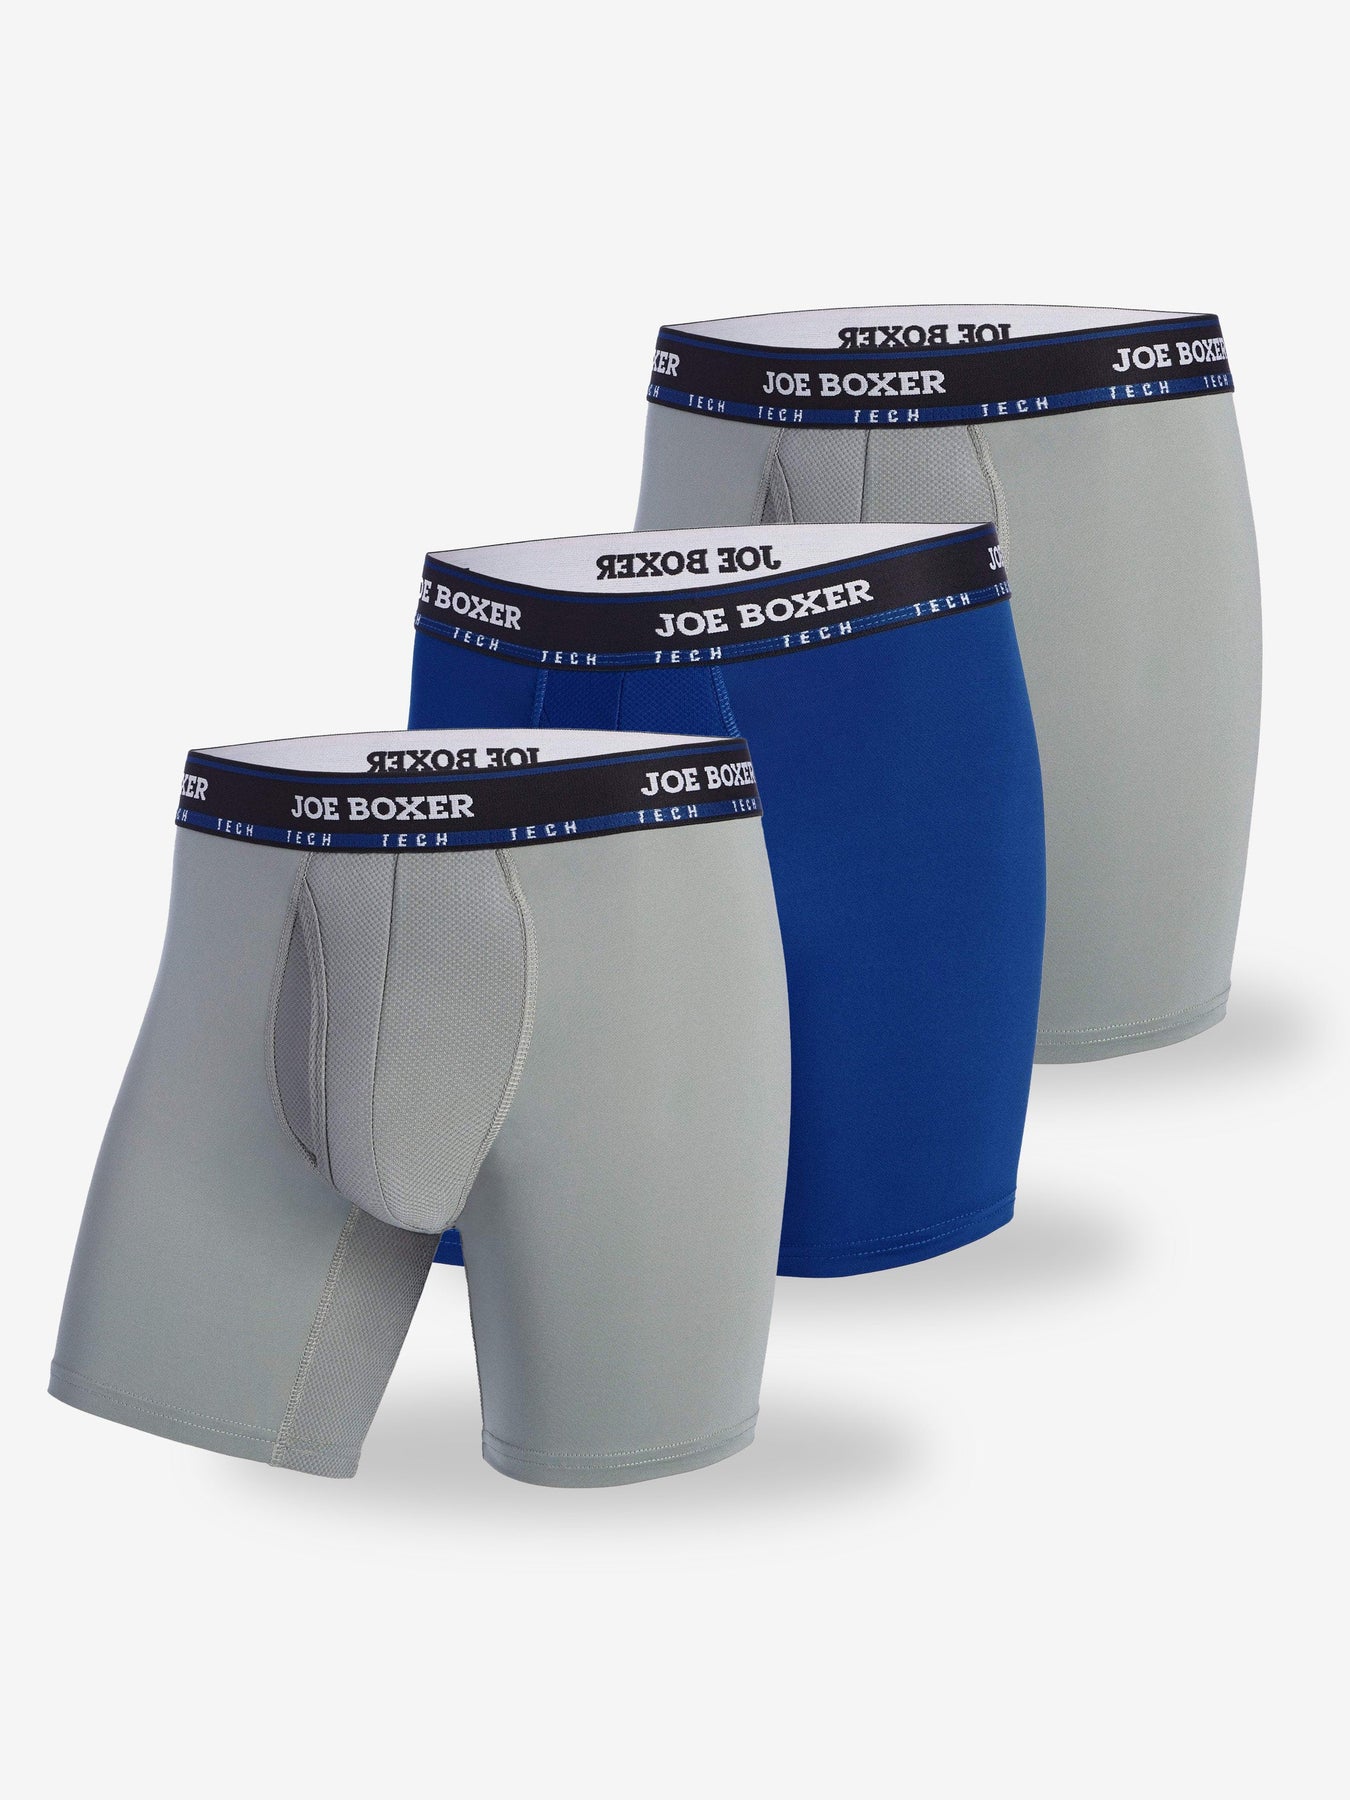 Joe Sir 4PCS Underwear Men Boxer Shorts Modal Boxers L-6XL Cotton Shorts  Plus Size Mid-high Panty Lingerie